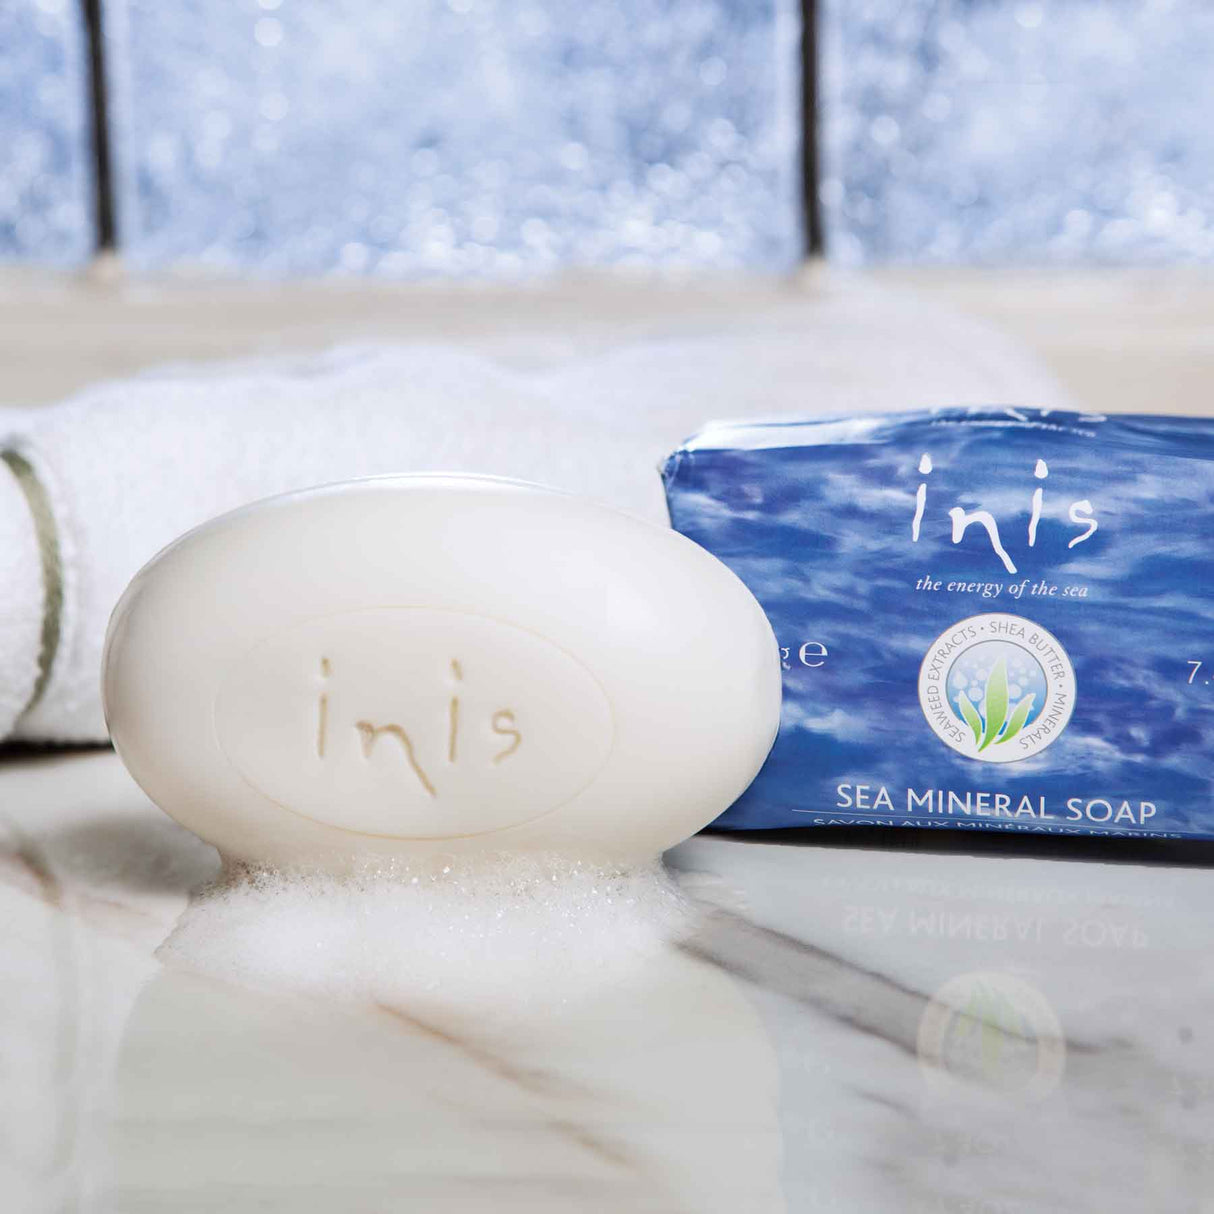 Inis Sea Mineral Soap - Creative Irish Gifts